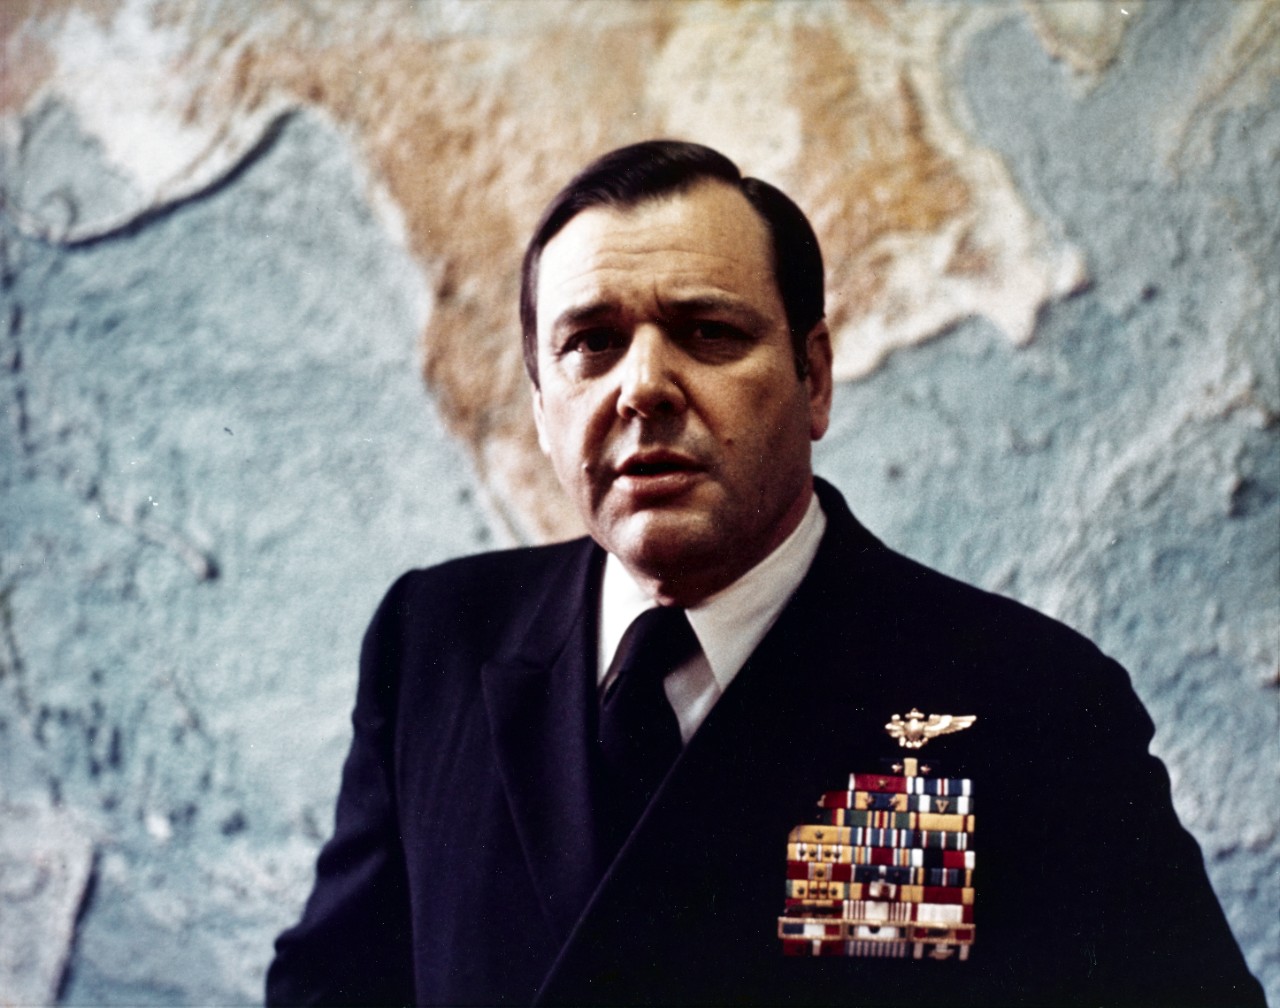 Photo #: NH 103806-KN Admiral James L. Holloway, III, USN